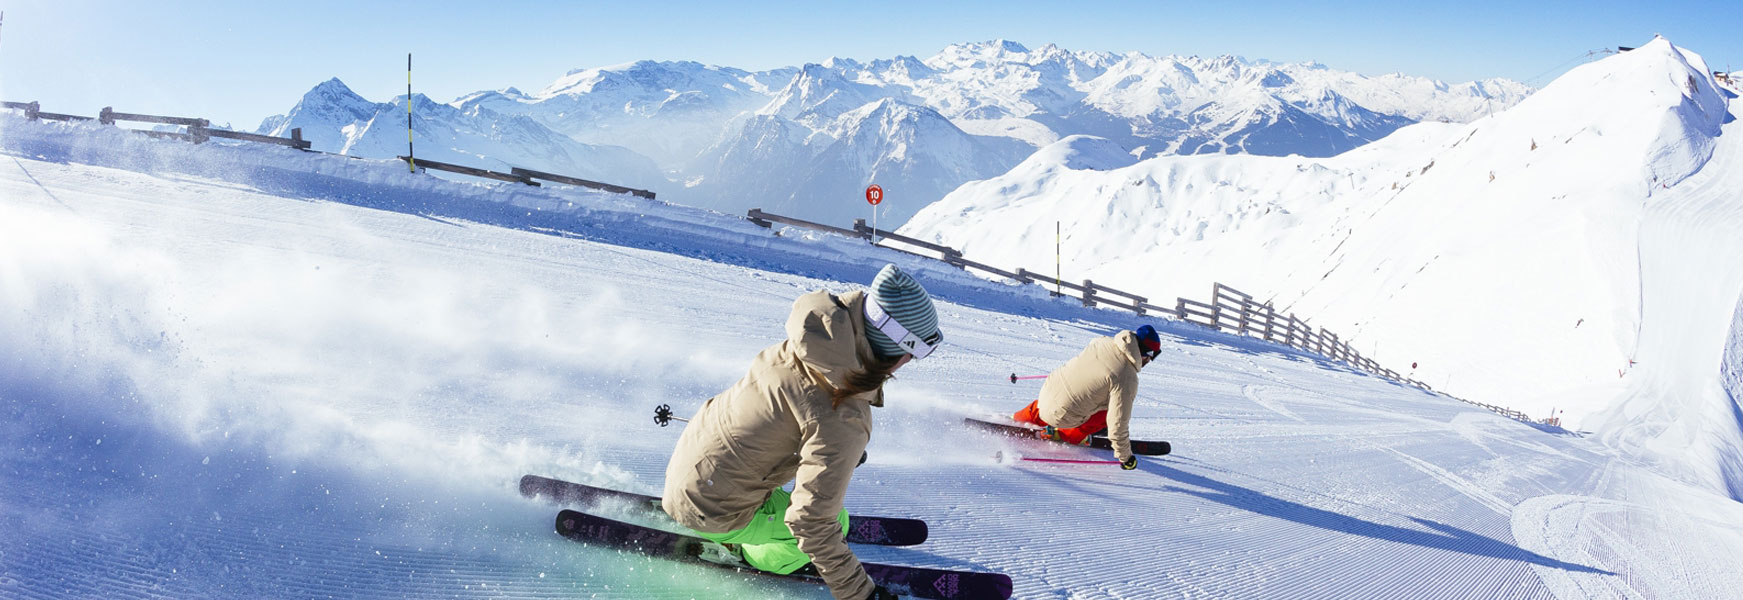 Location Ski Intersport La Plagne Montchavin